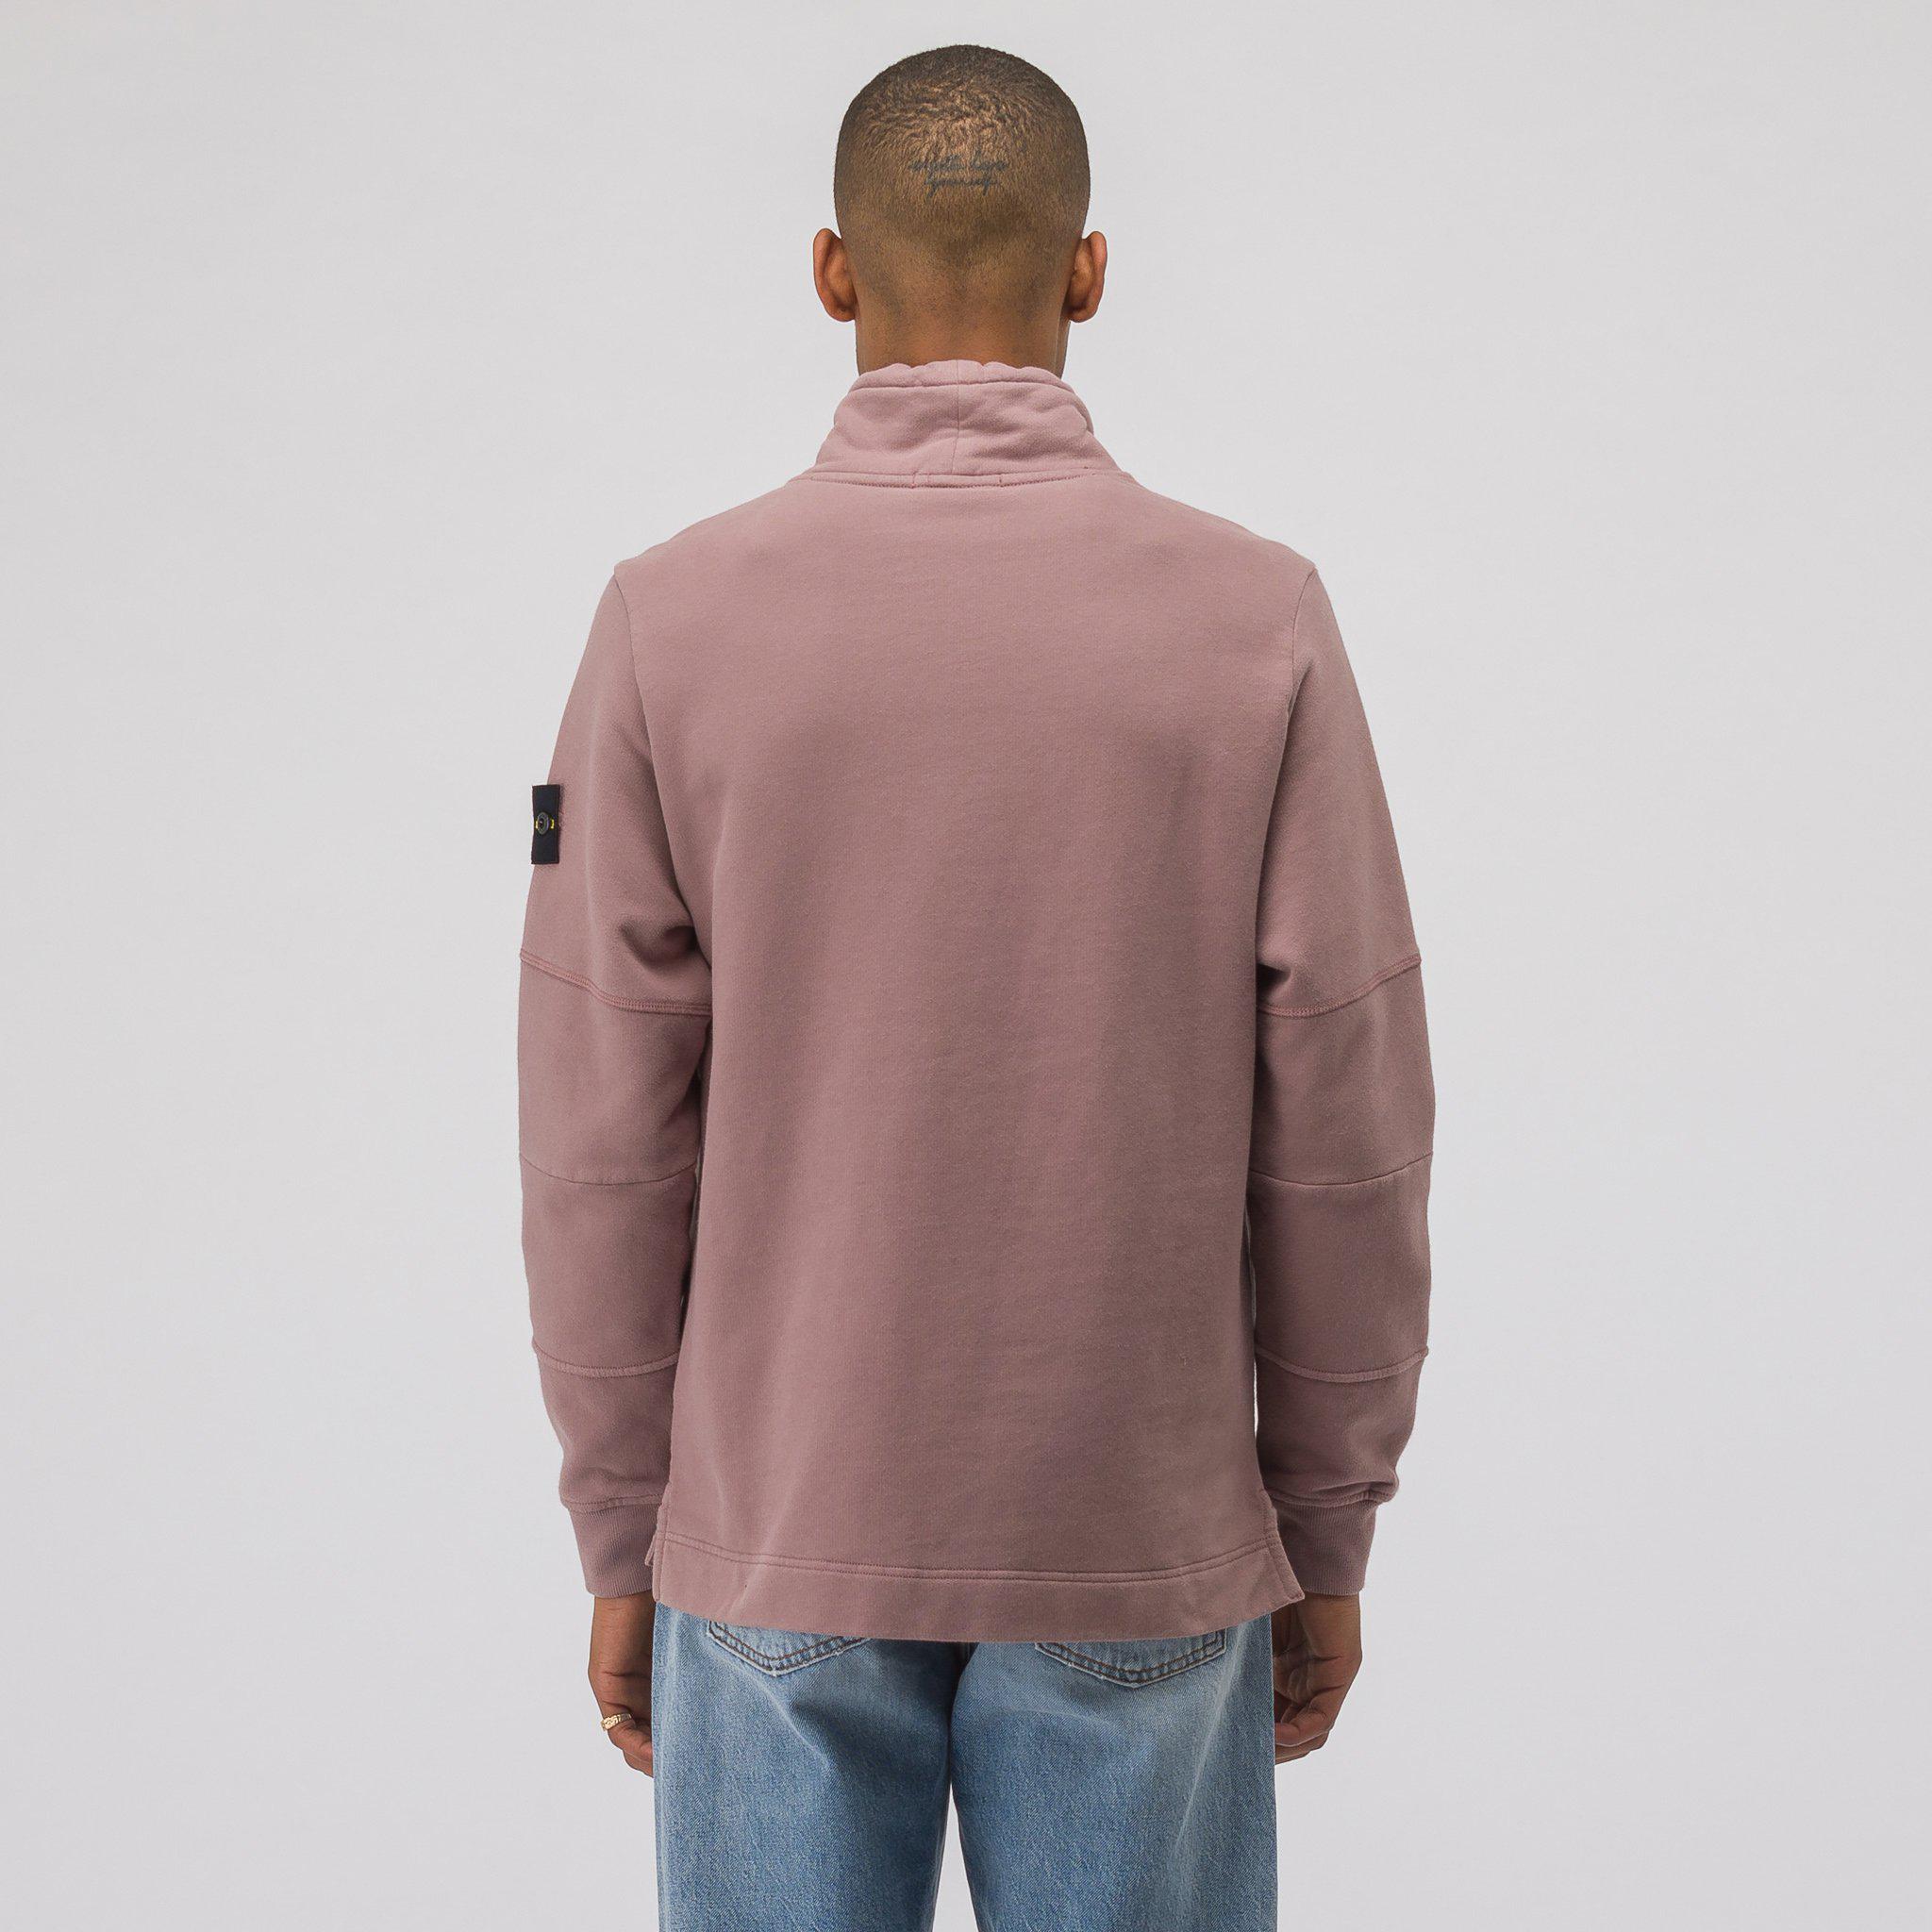 Stone Island Fleece 61720 High Collar Sweatshirt In Rose Quartz for Men -  Lyst